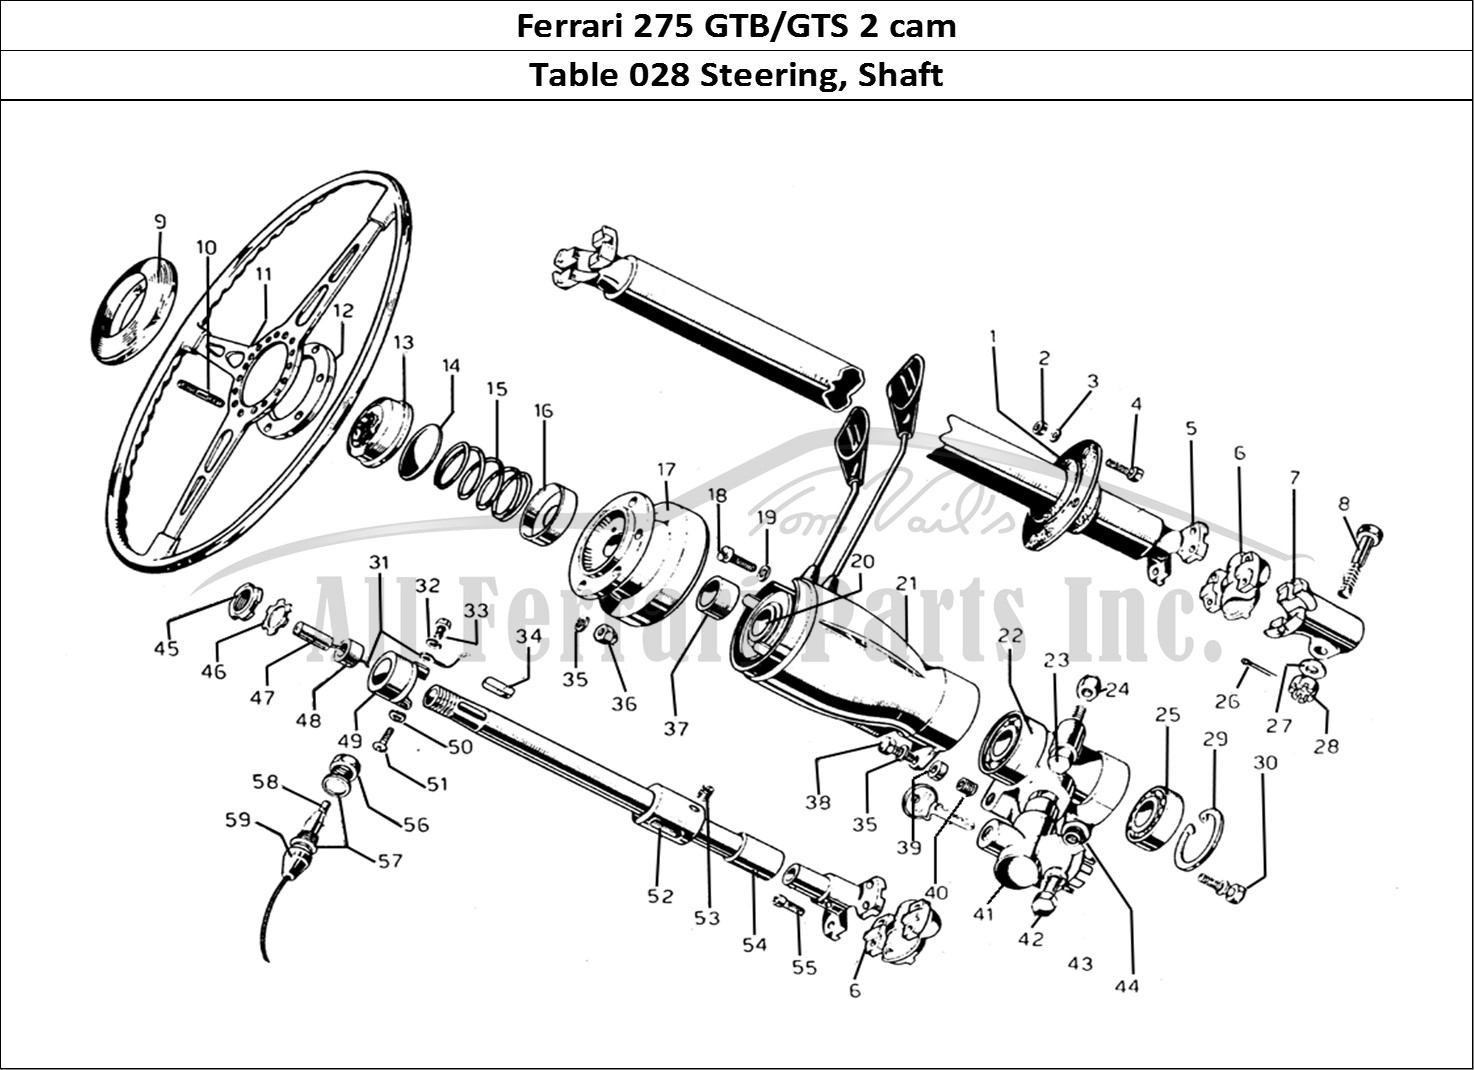 Ferrari Parts Ferrari 275 GTB/GTS 2 cam Page 028 Steering & Shaft